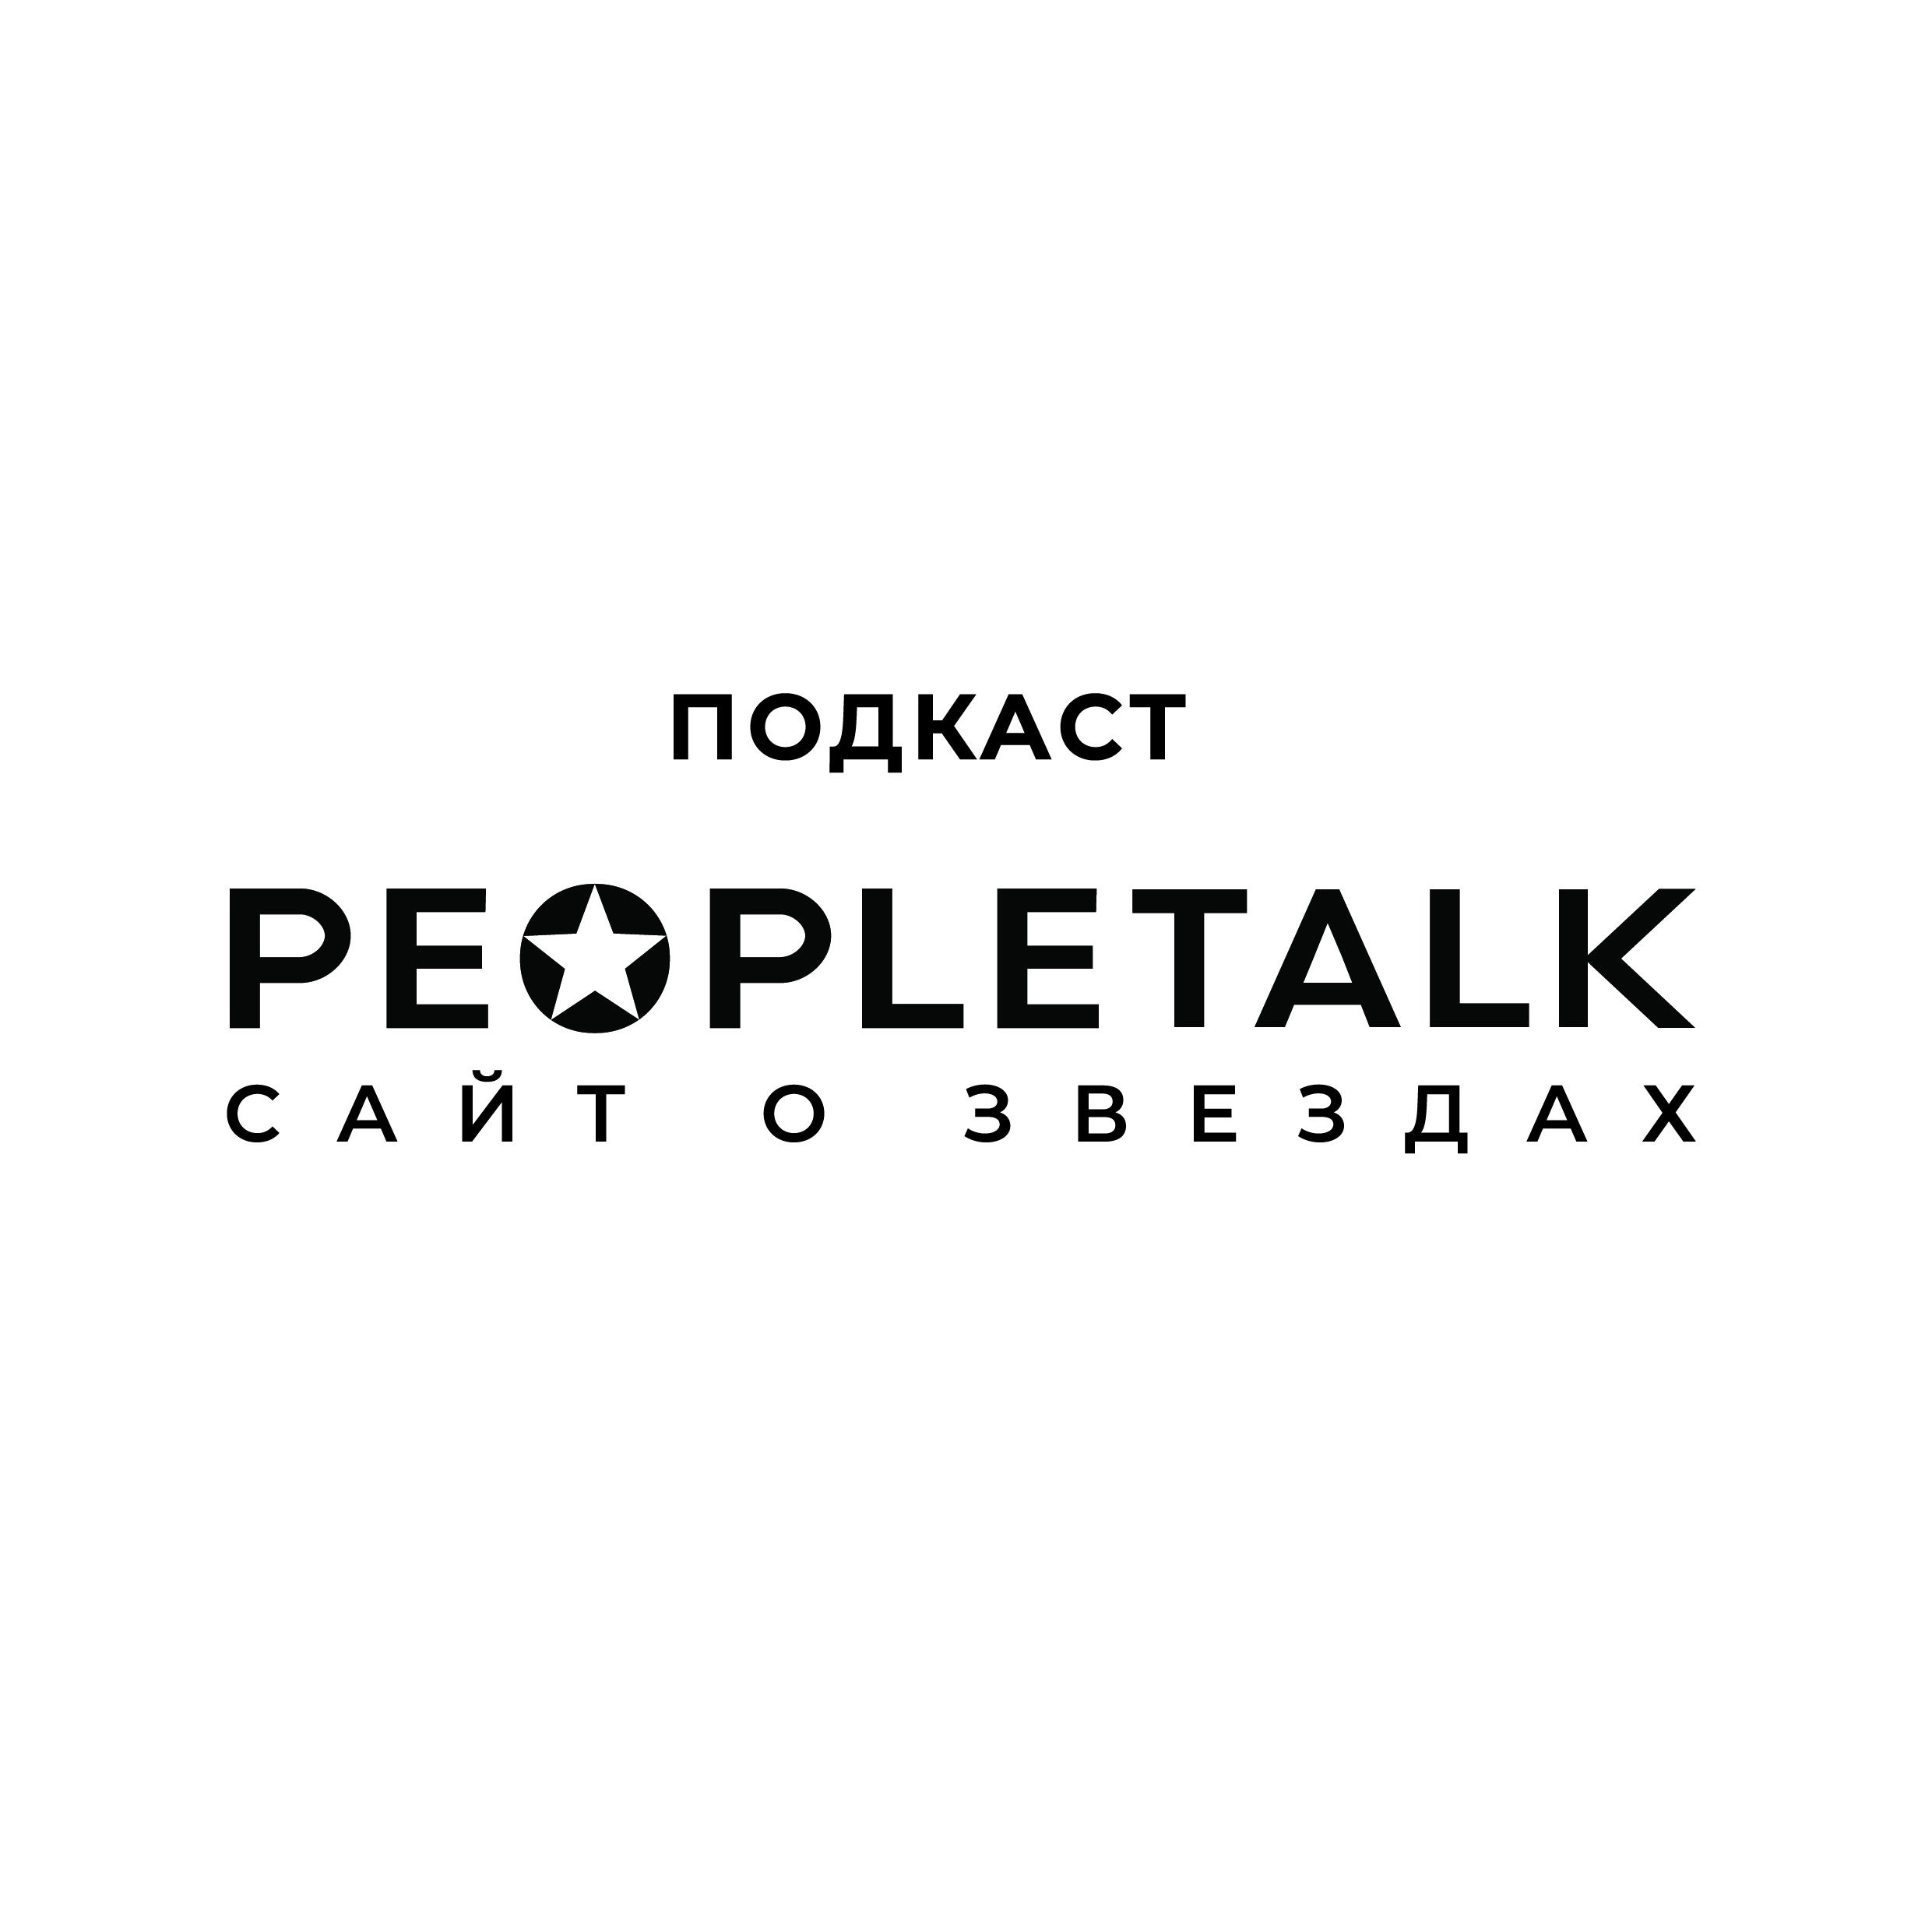 Peopletalk. Пипл толк. PEOPLETALK.ru. Пипл ток.